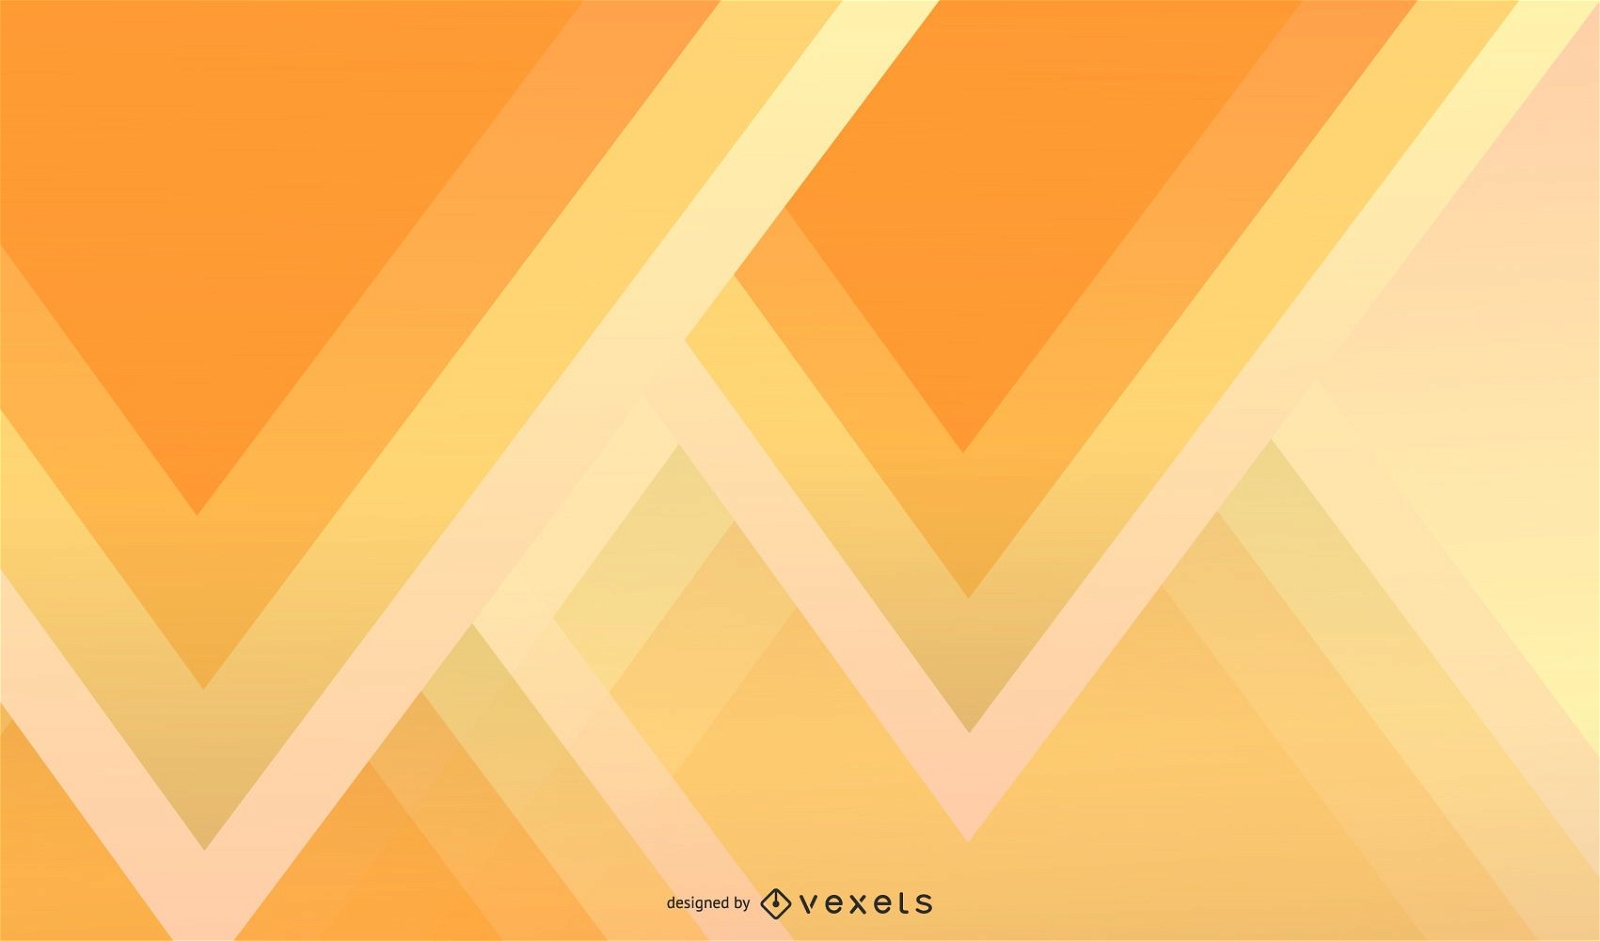 Descarga Vector De Fondo De Pantalla Abstracto Triángulo Amarillo